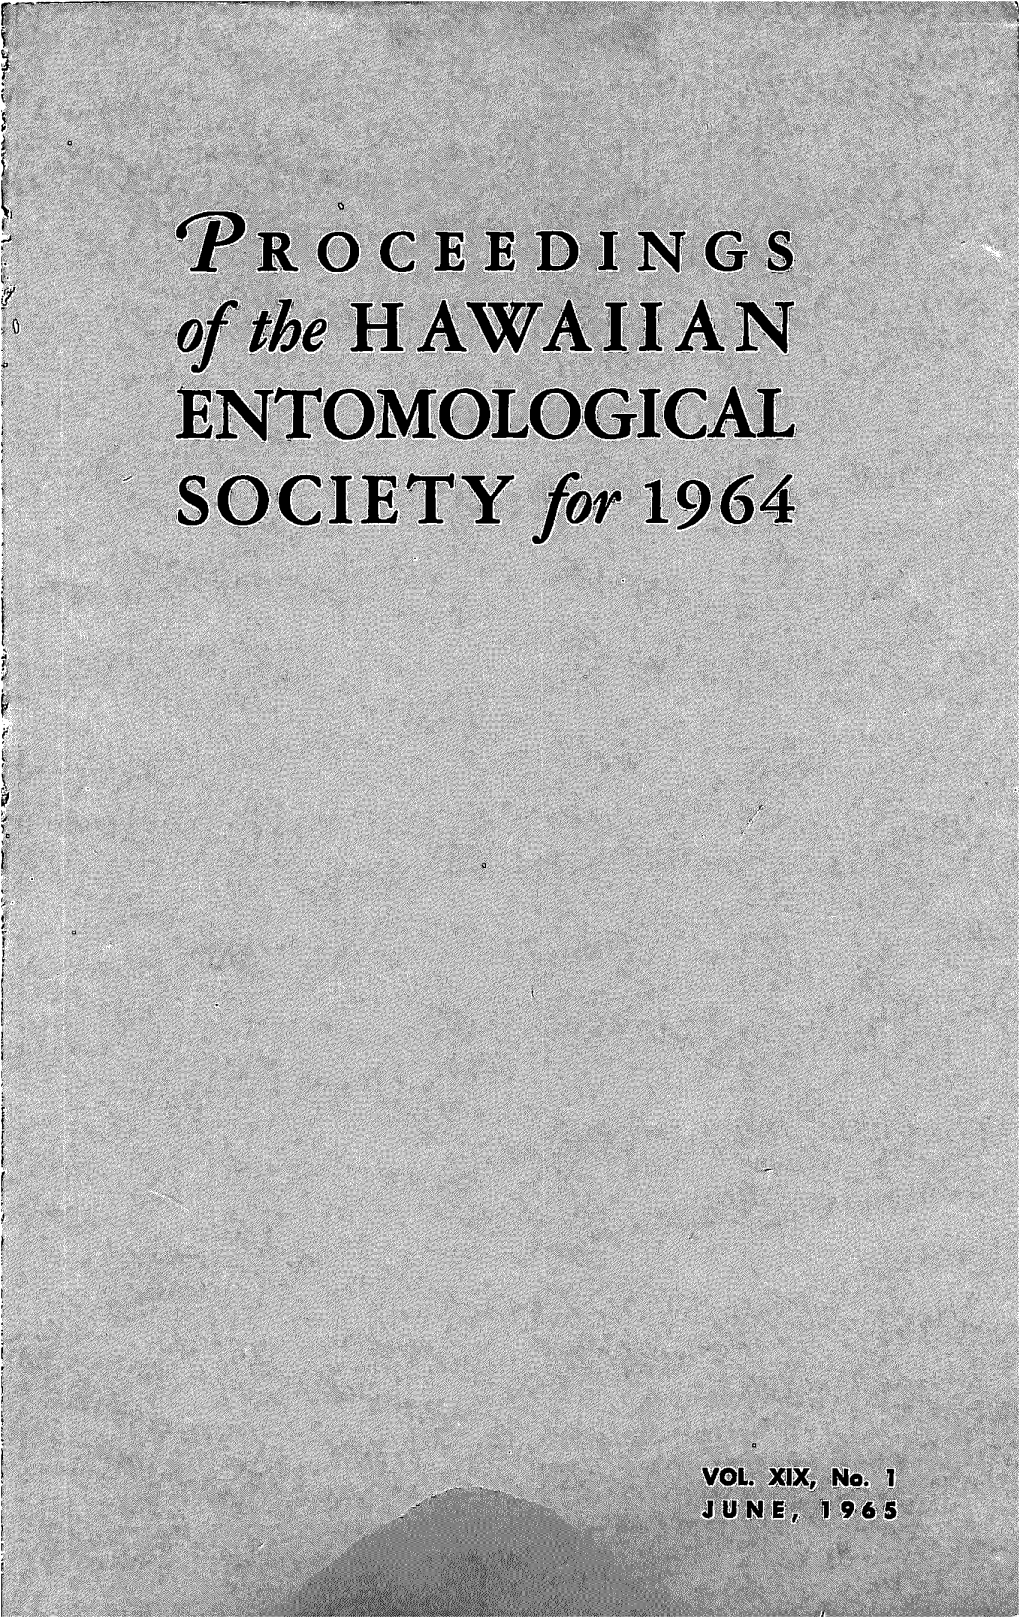 'Proceedings of the HAWAIIAN ENTOMOLOGICAL SOCIETY for 1964